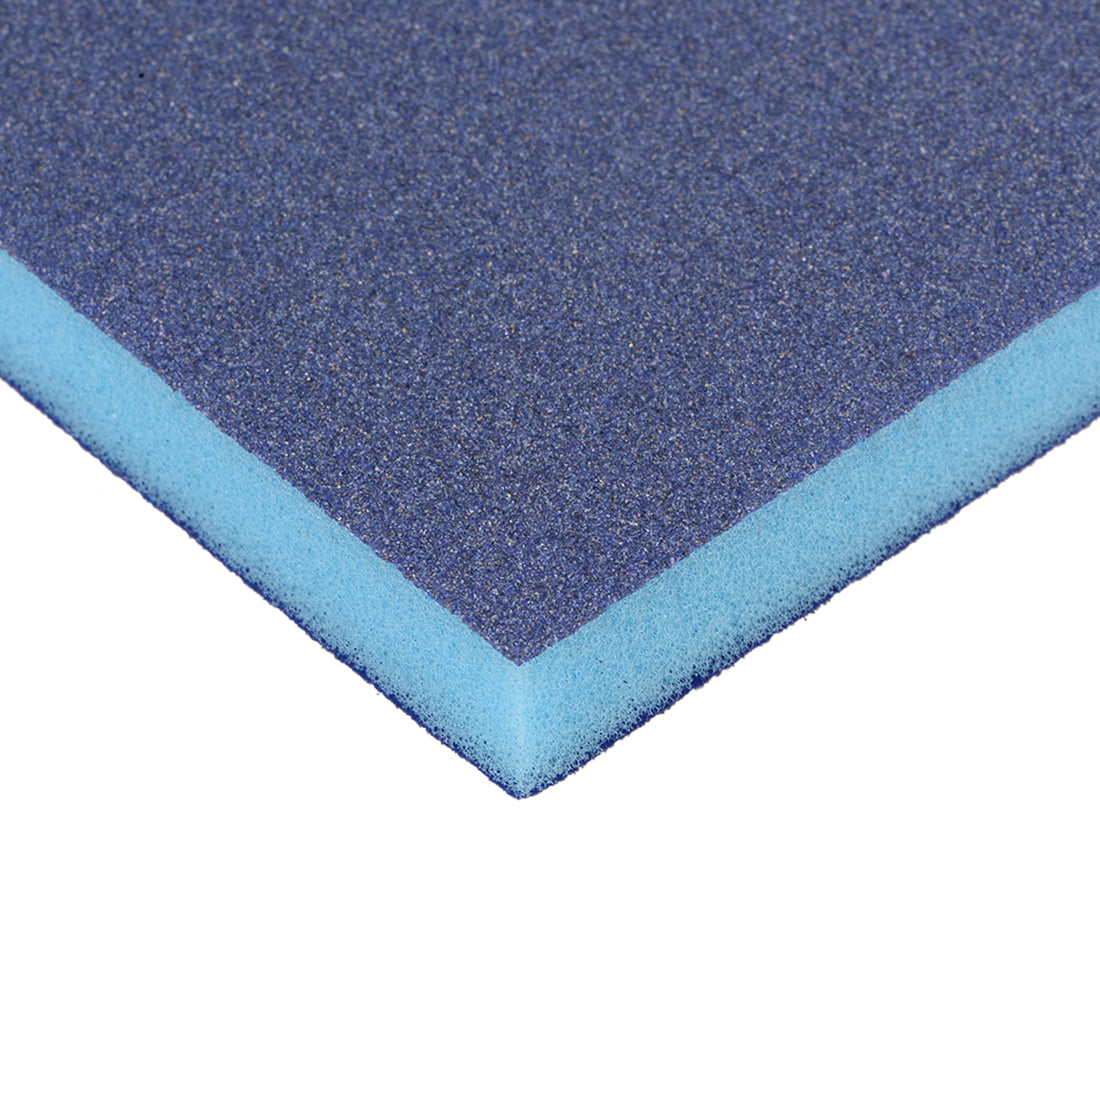 uxcell Uxcell Sanding Sponge 120 Grit Sanding Block Pad 4.7inch x 3.9inch x 0.4inch Blue 3pcs